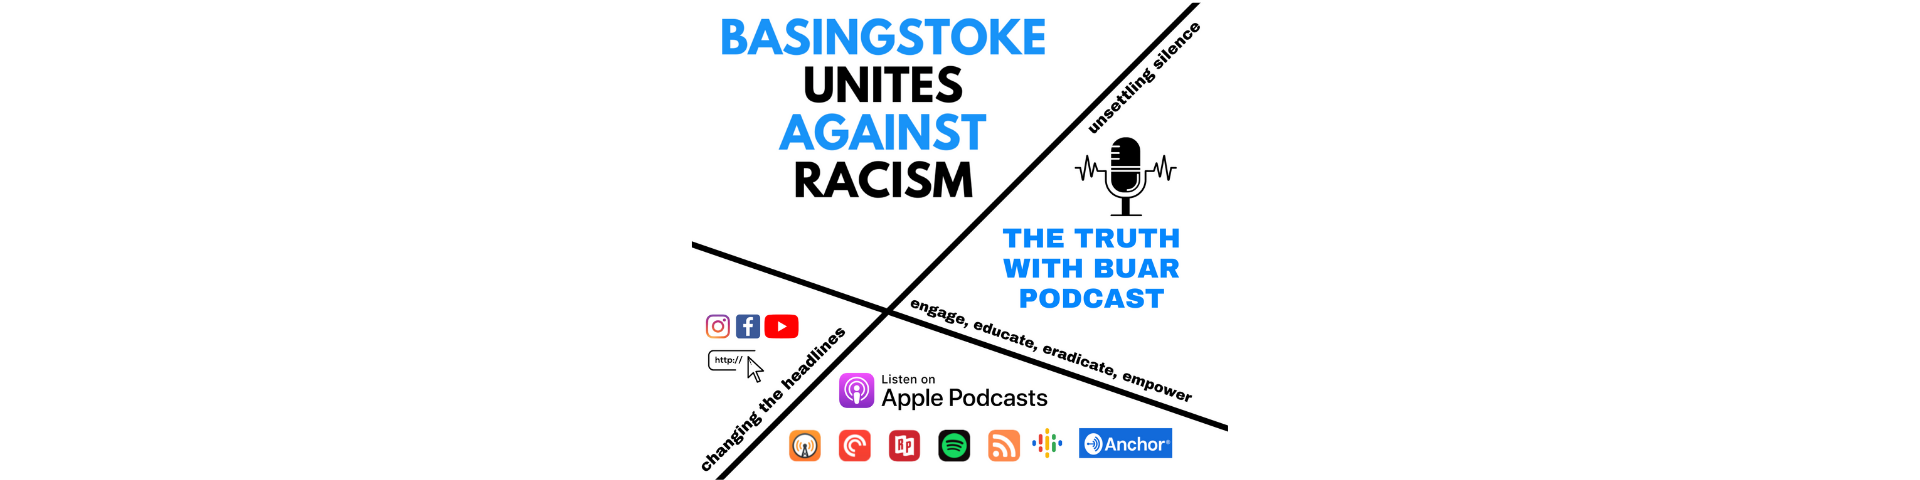 Basingstoke Unites Against Racism